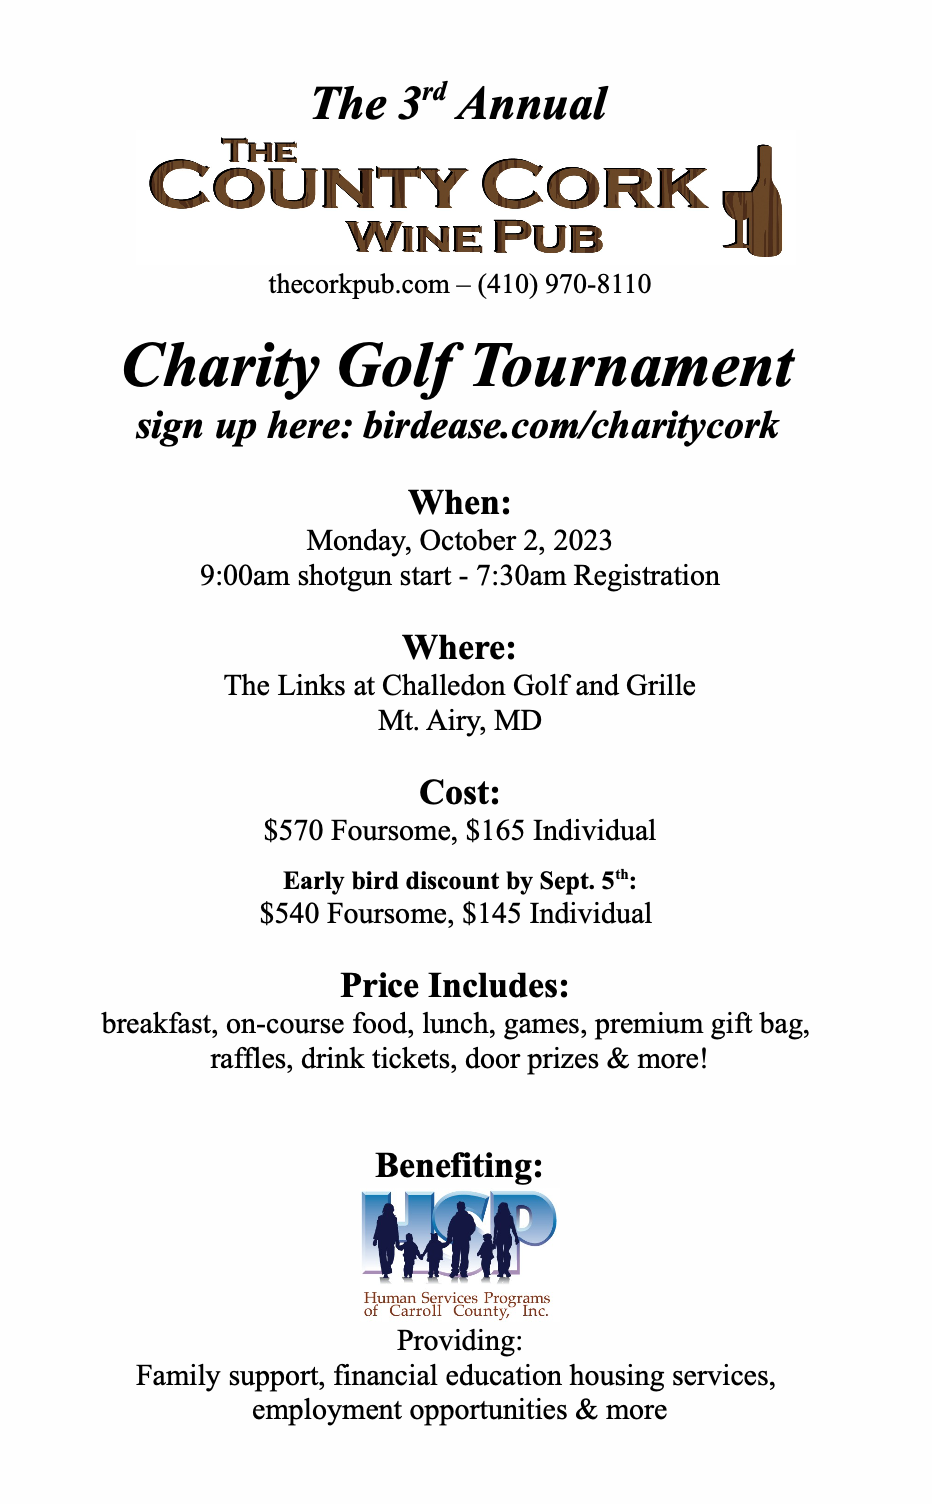 Charity Golf Tournament Flyer